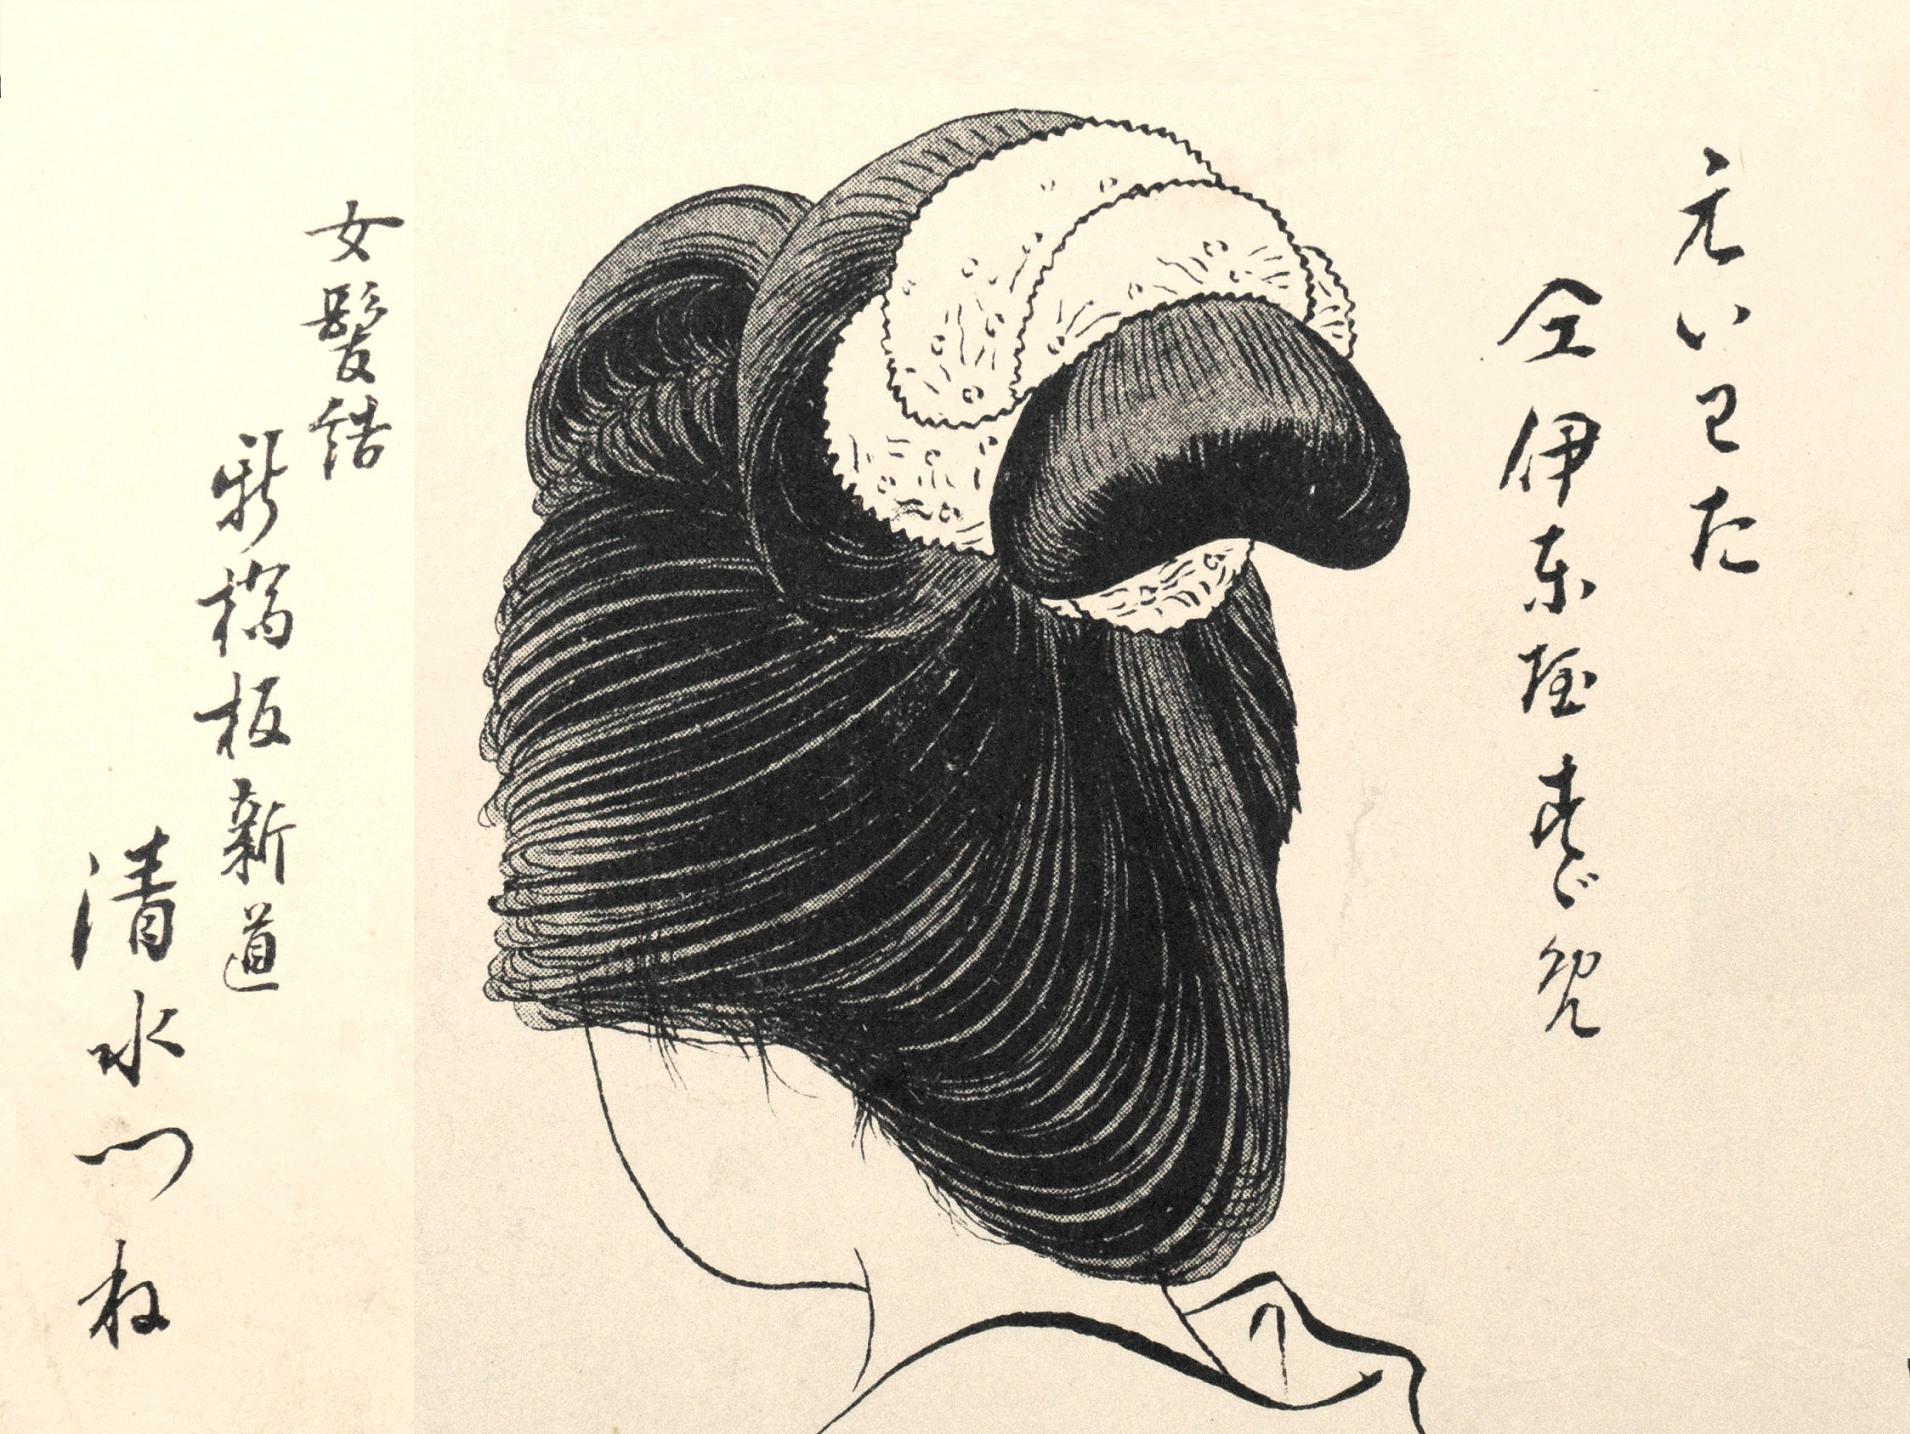 Traditional Geisha hairstyle.